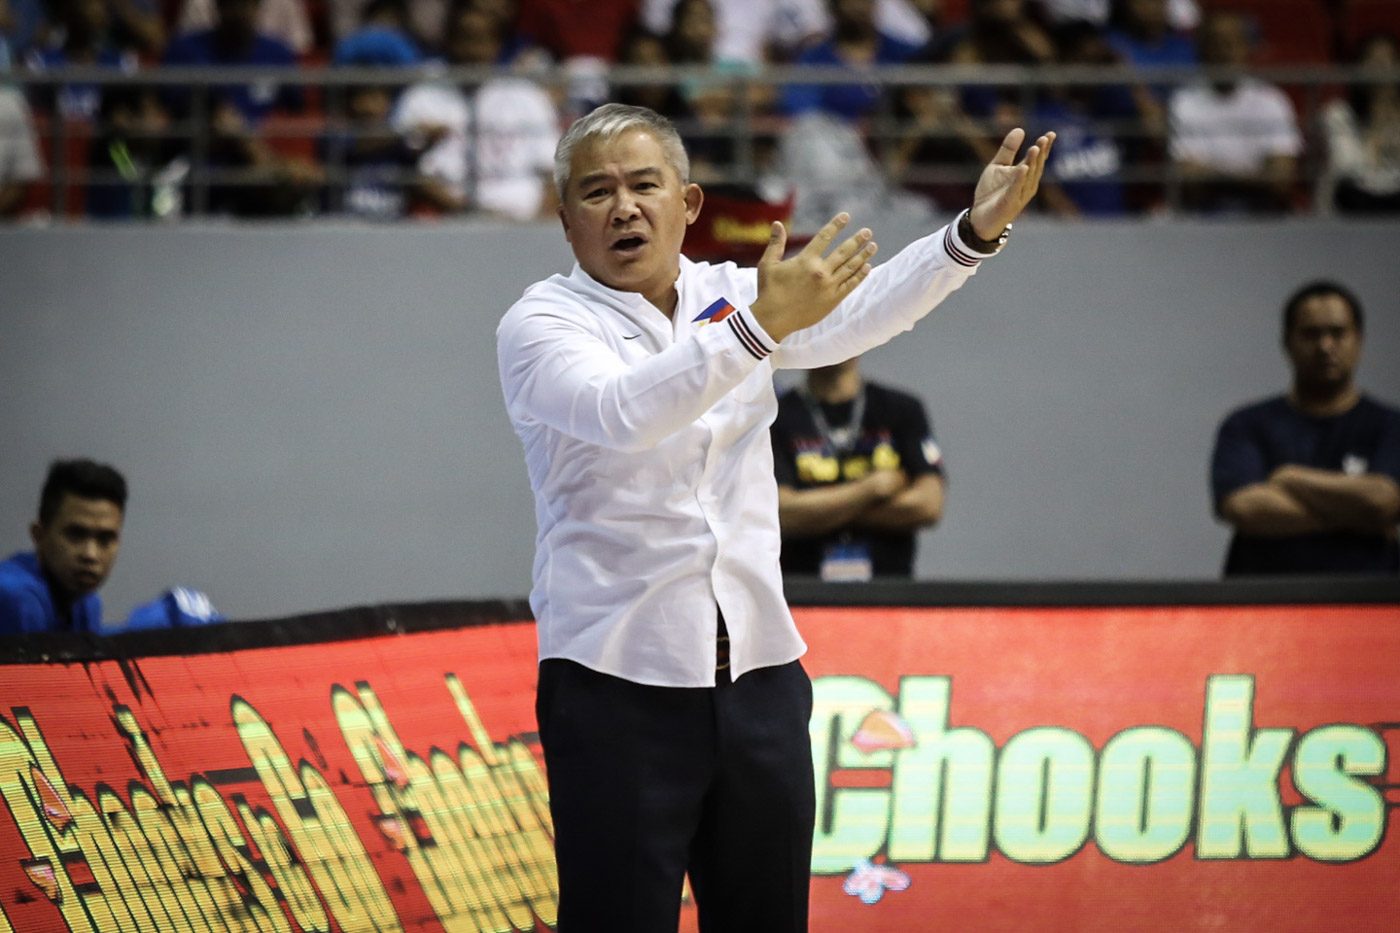 Chot Reyes clarifies ‘hit somebody’ comment before FIBA brawl